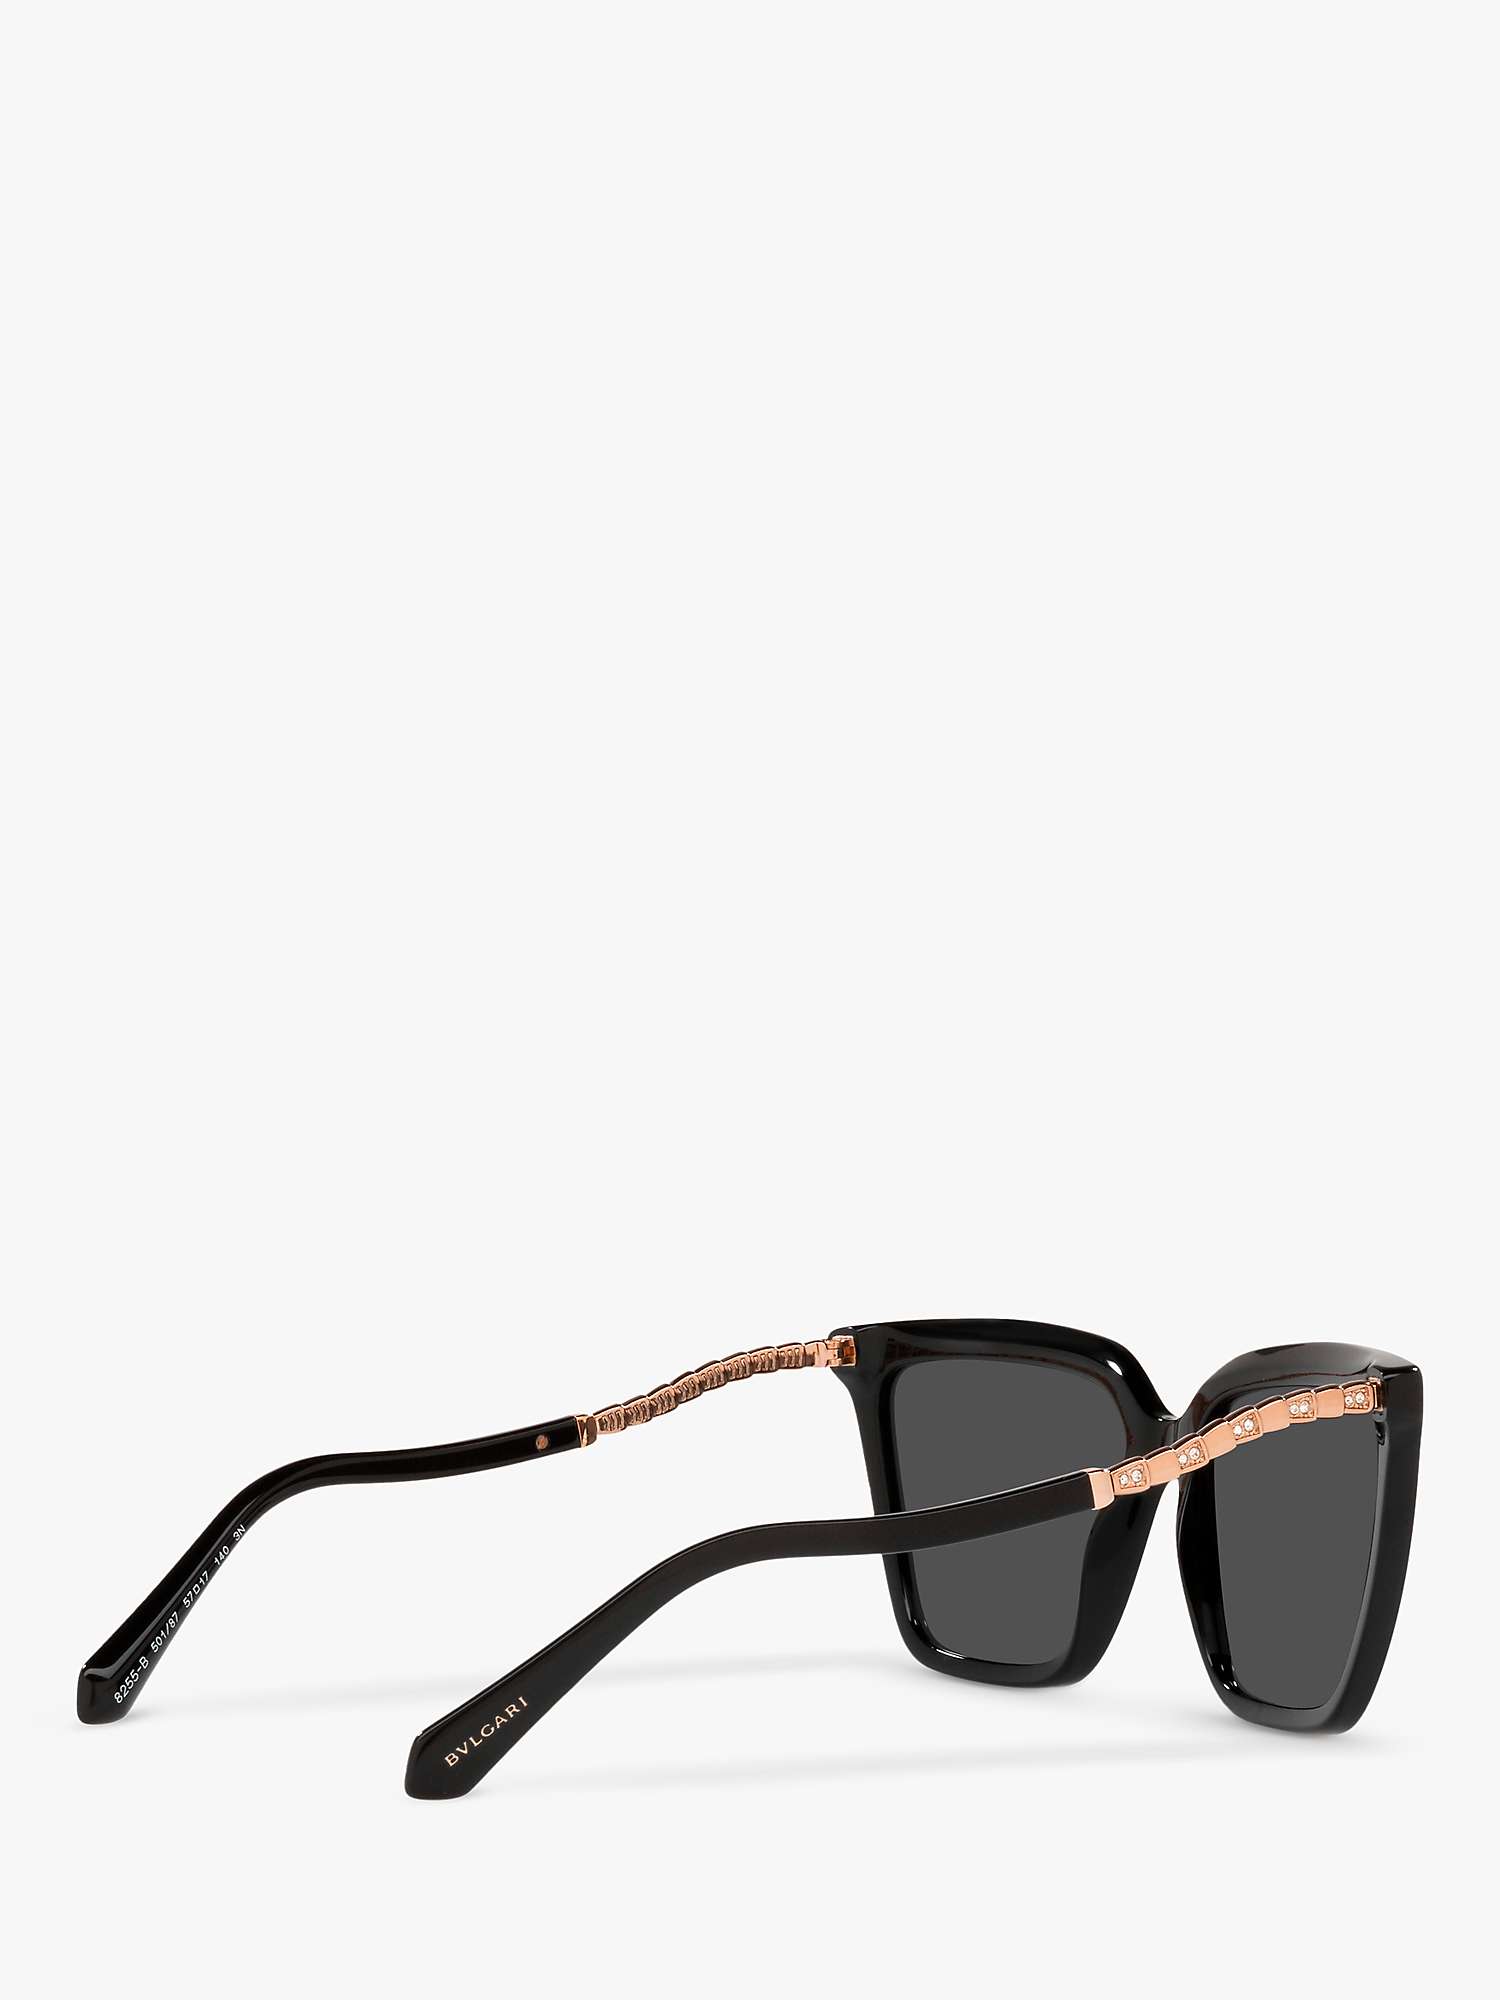 Buy BVLGARI BV8255B Women's Cat's Eye Sunglasses, Black/Grey Online at johnlewis.com